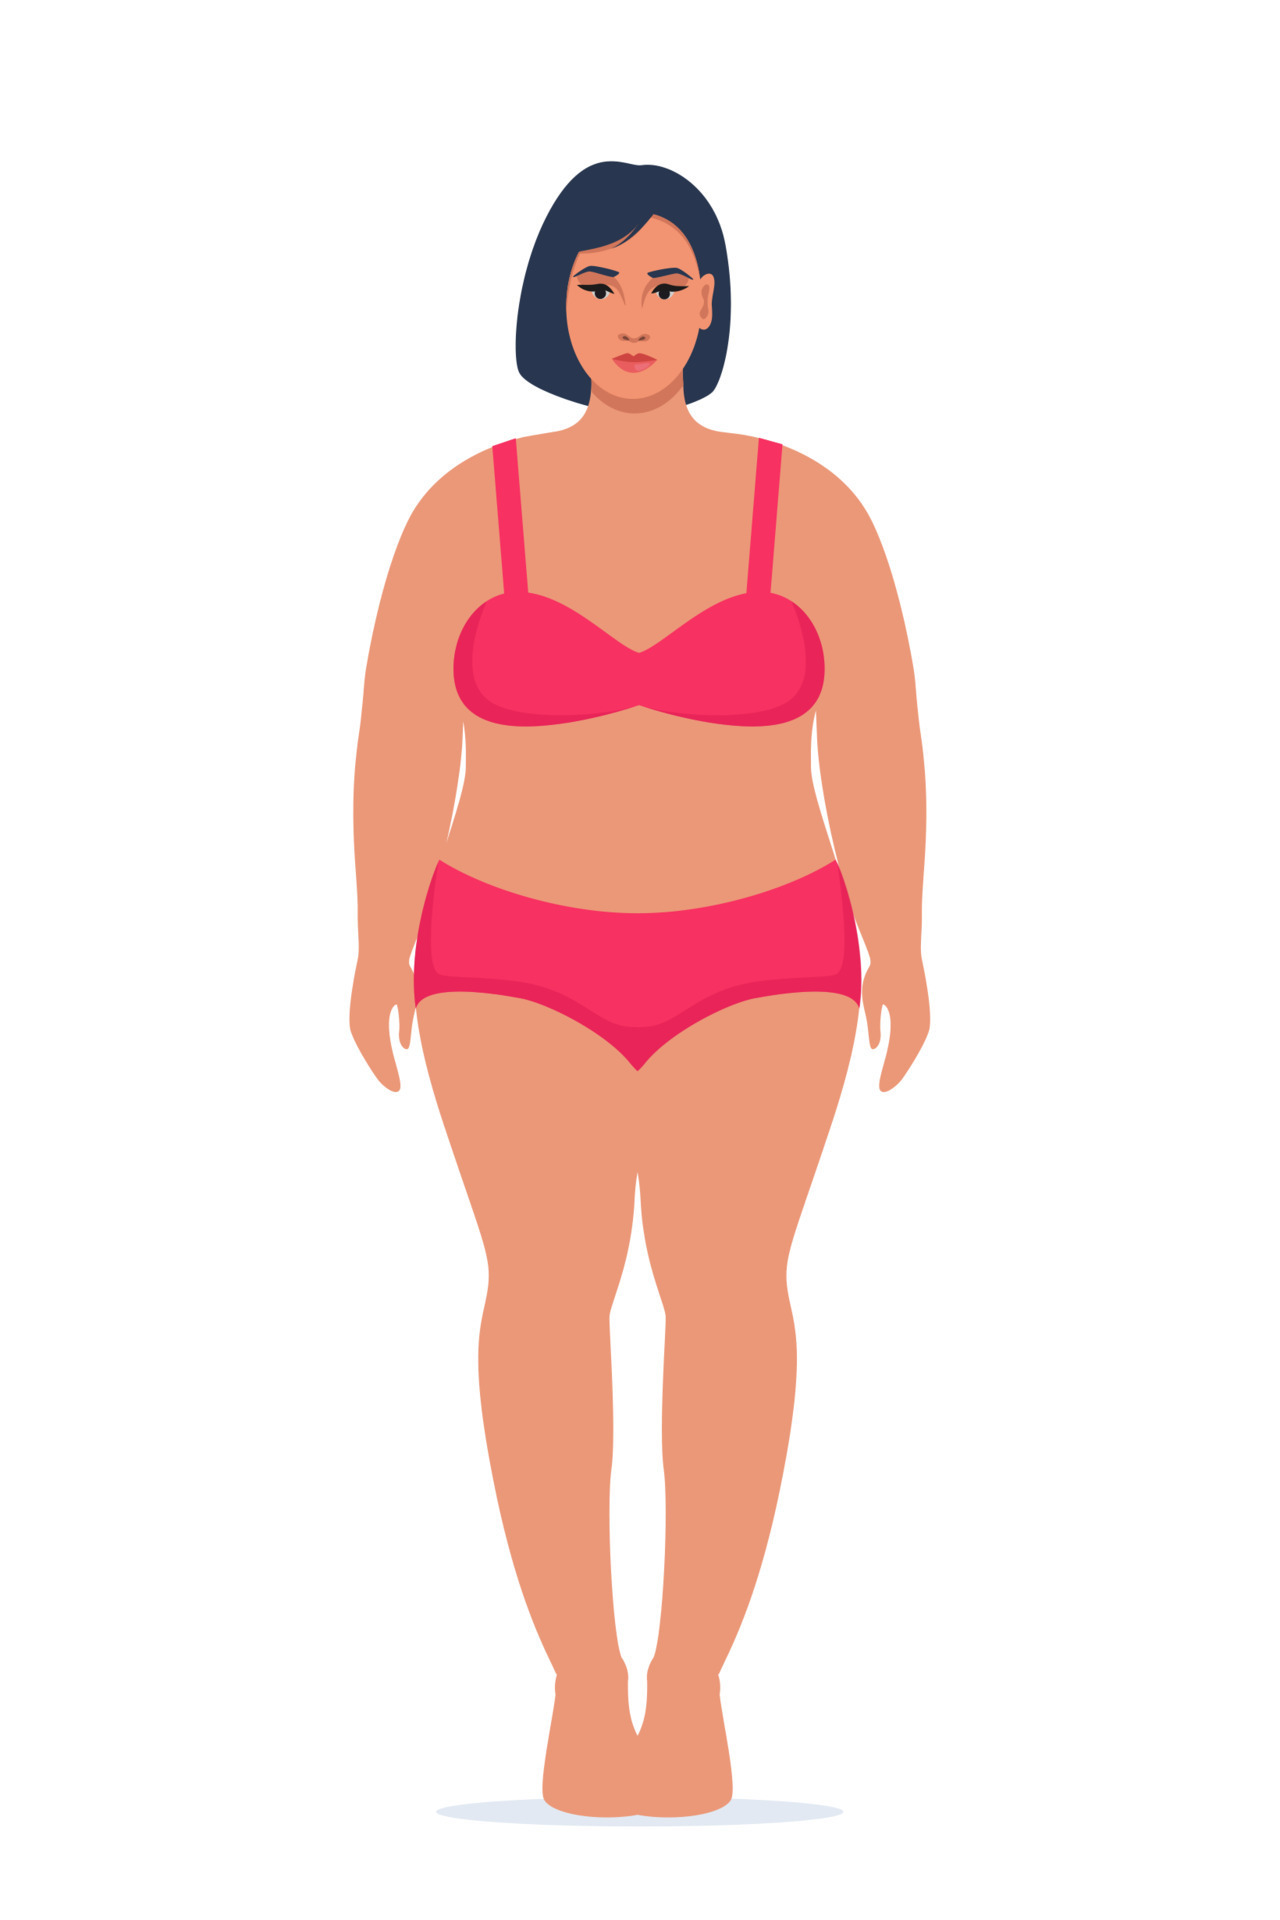 Body positive woman in underwear. Plus size female character